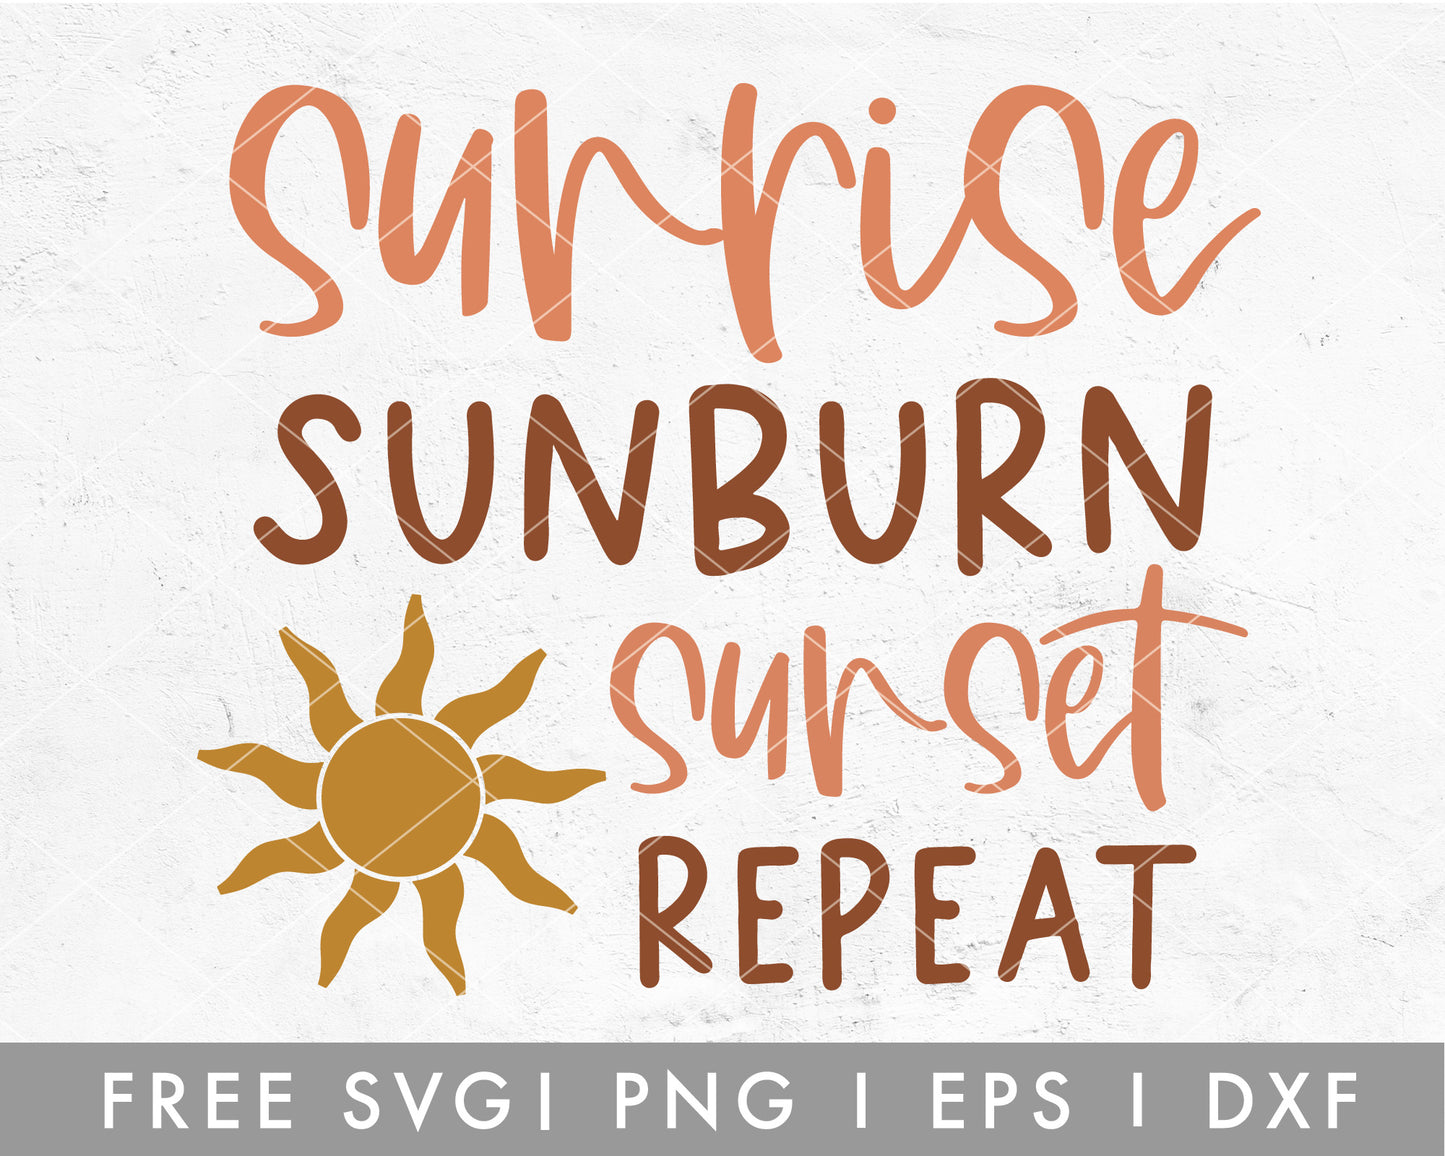 FREE Sunrise Sunburn Repeat SVG